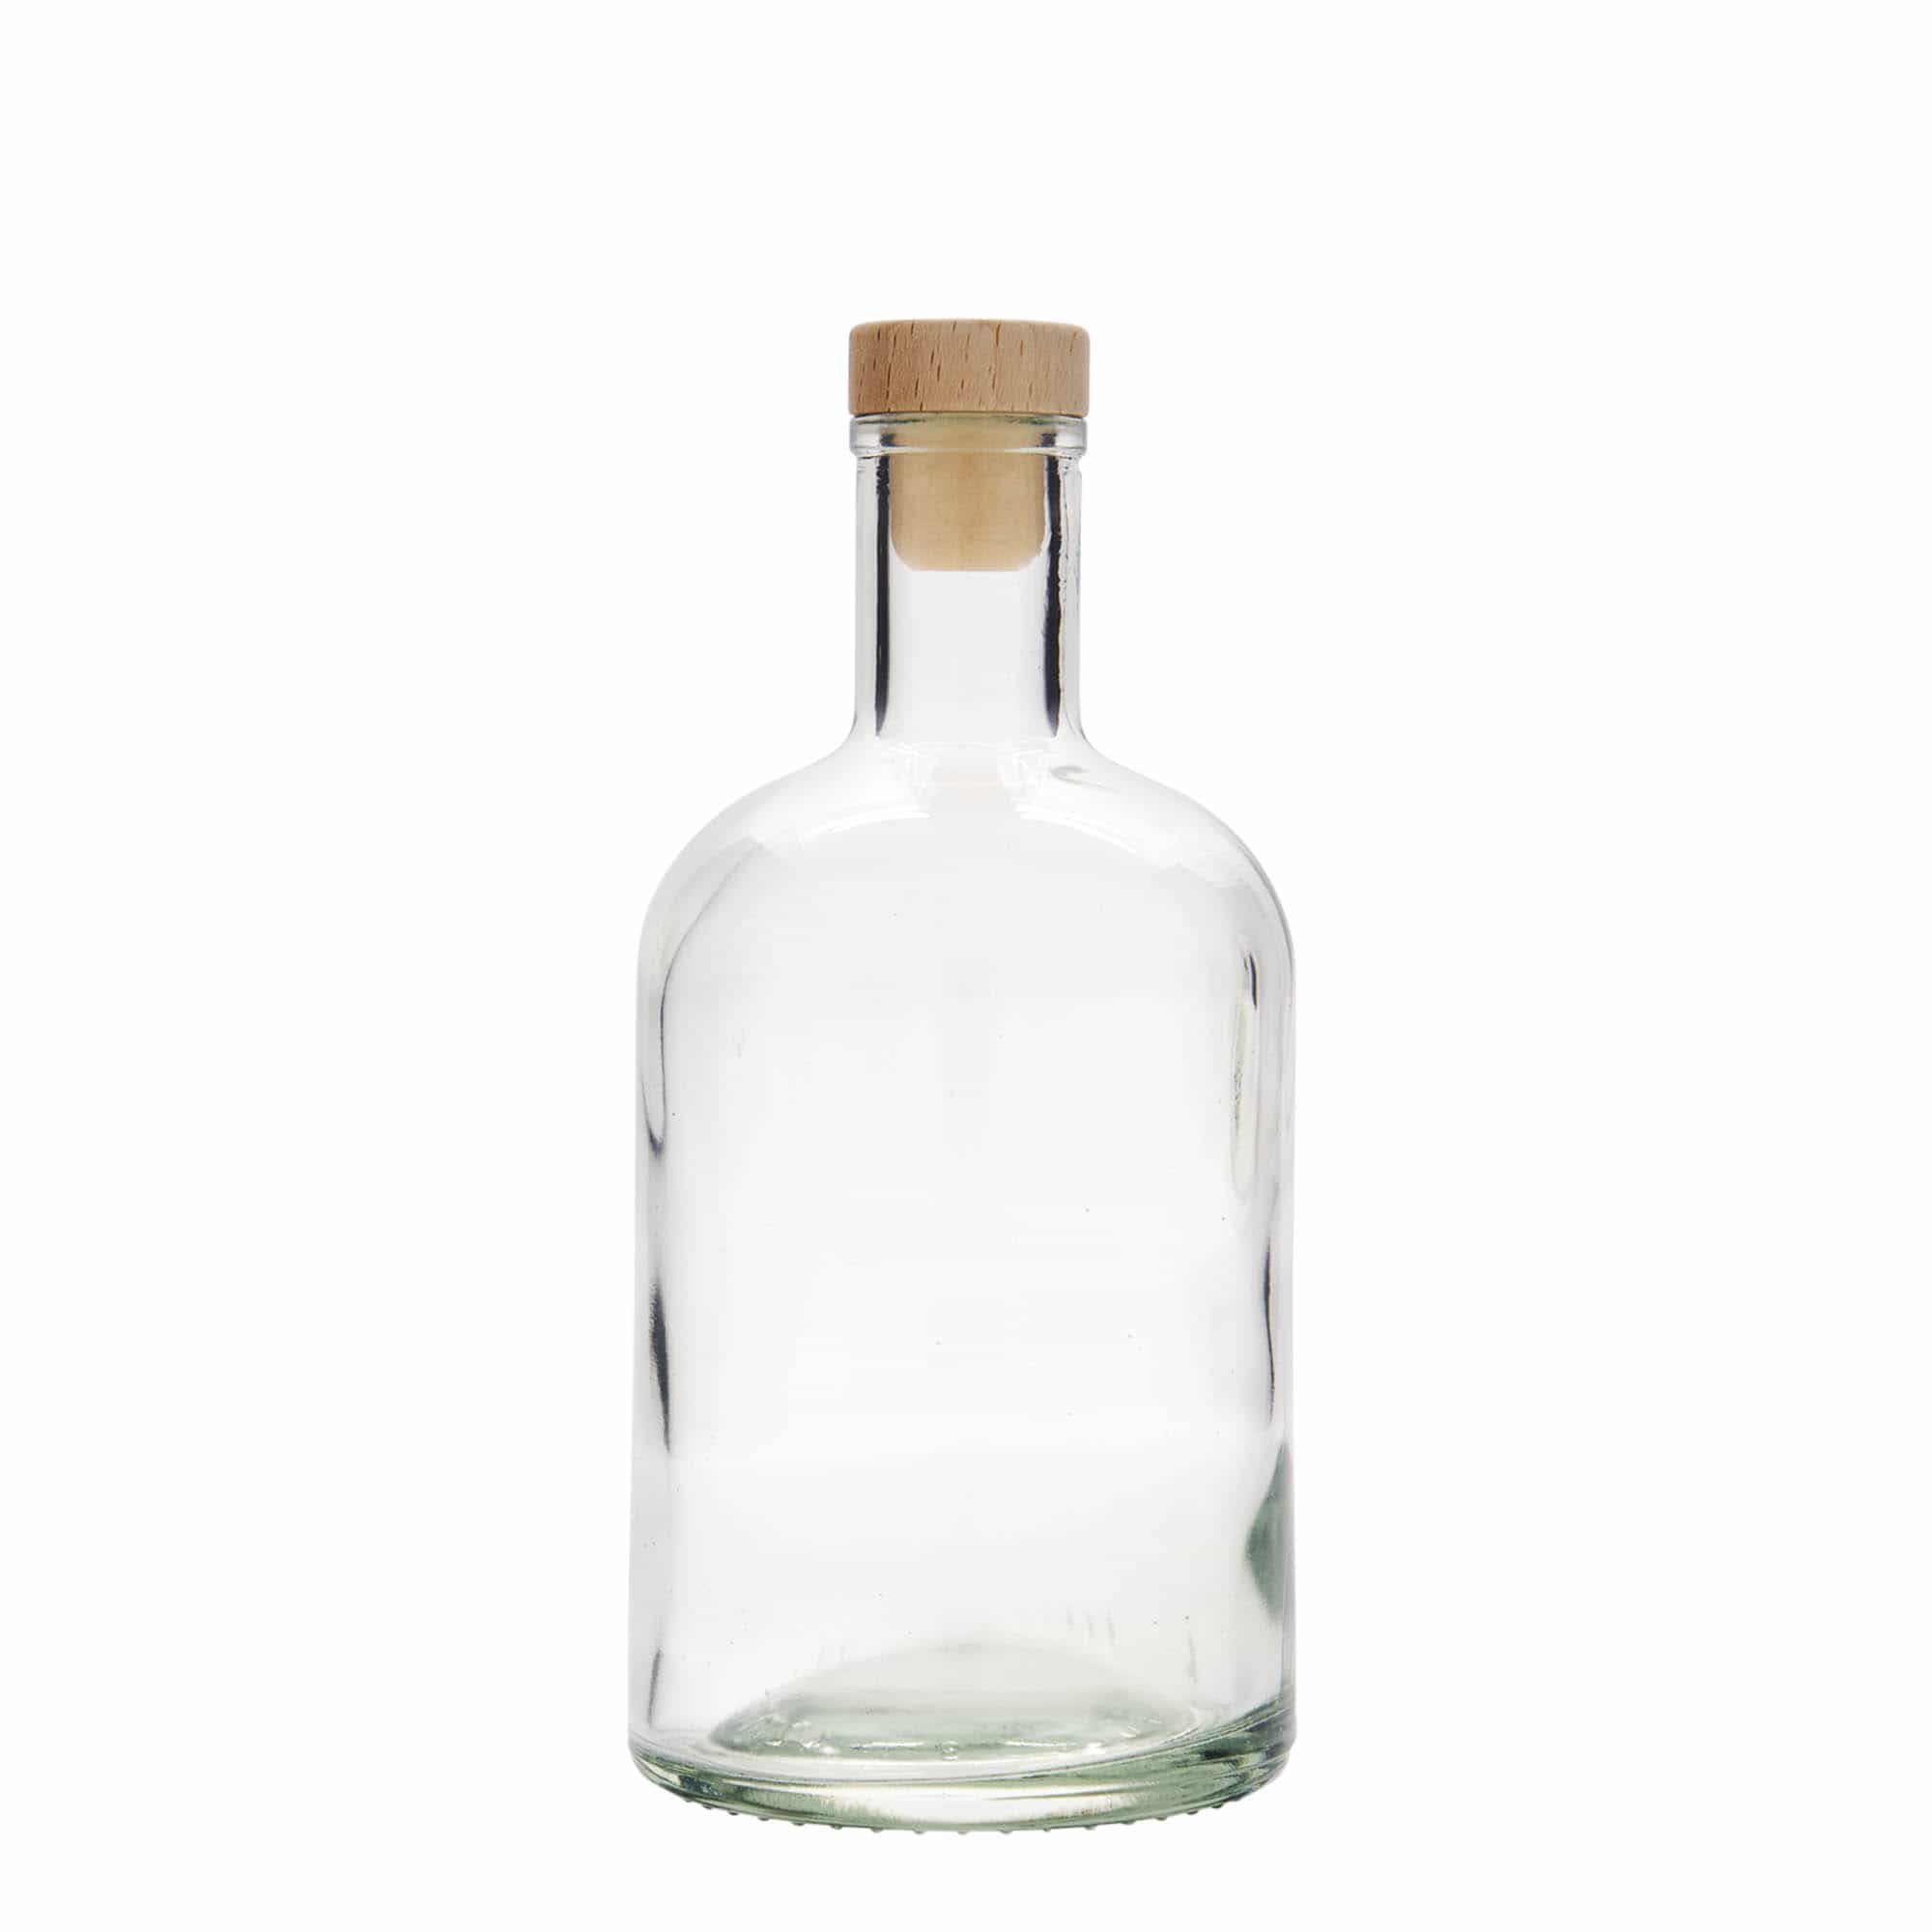 700 ml glass bottle 'Gerardino', closure: cork